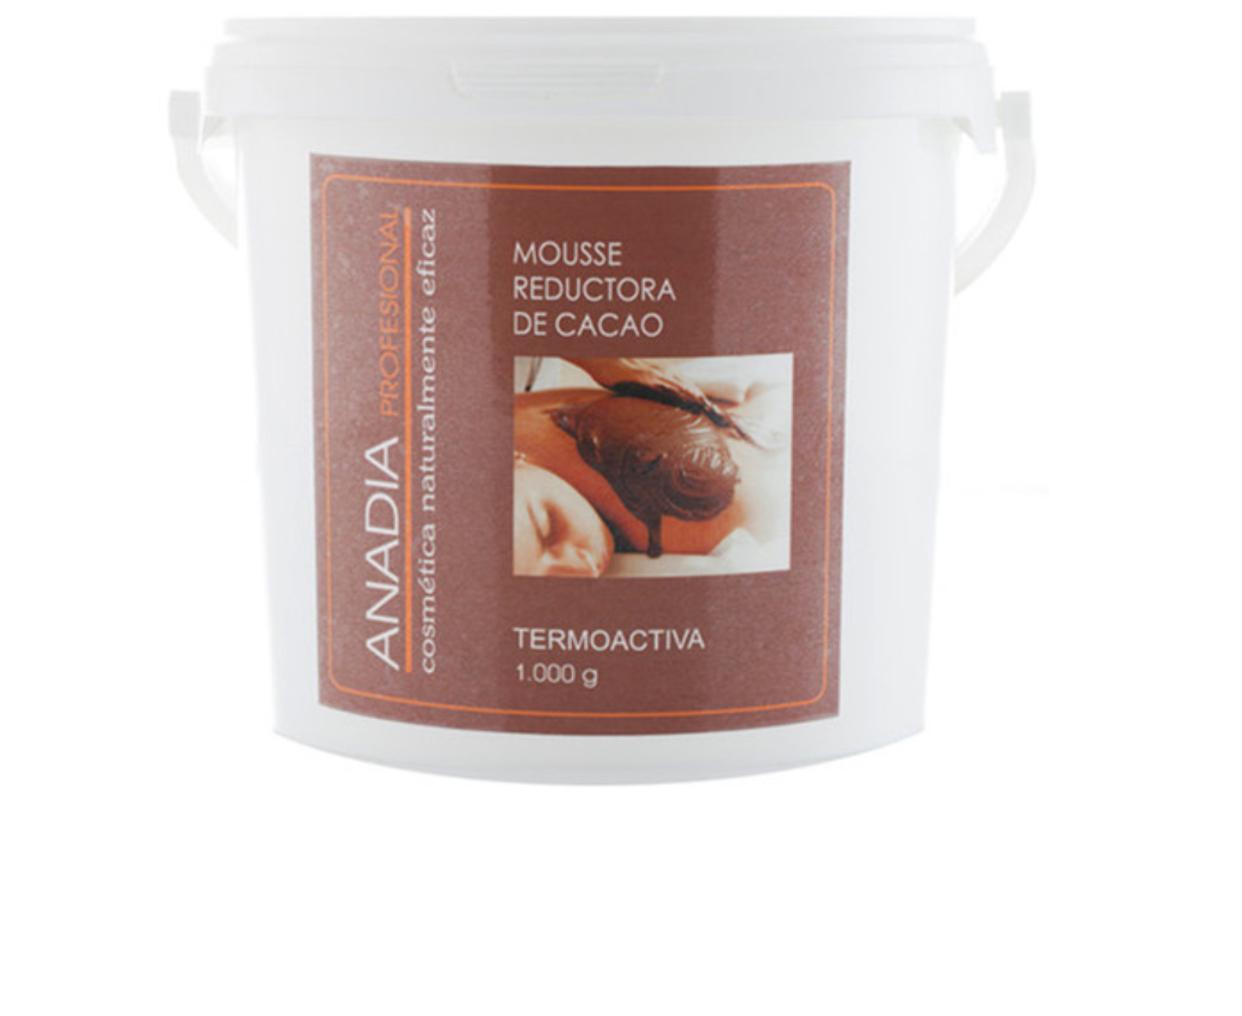 Mousse reductora de cacao 1000g Anadia